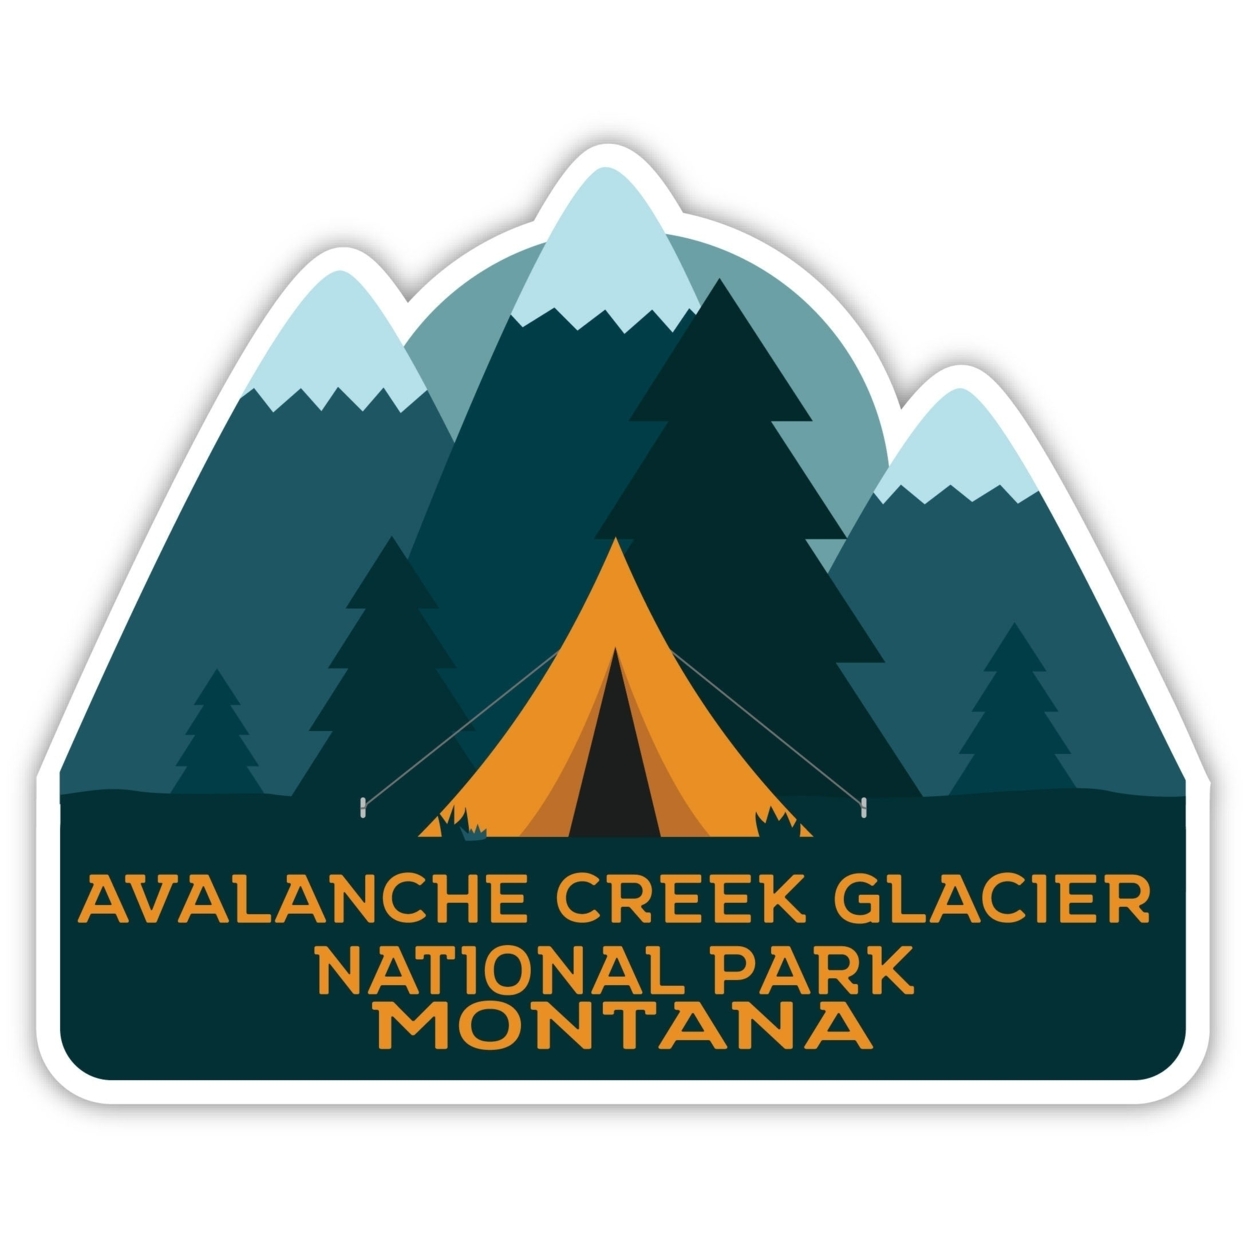 Avalanche Creek Glacier National Park Montana Souvenir Decorative Stickers (Choose Theme And Size) - 4-Pack, 6-Inch, Tent